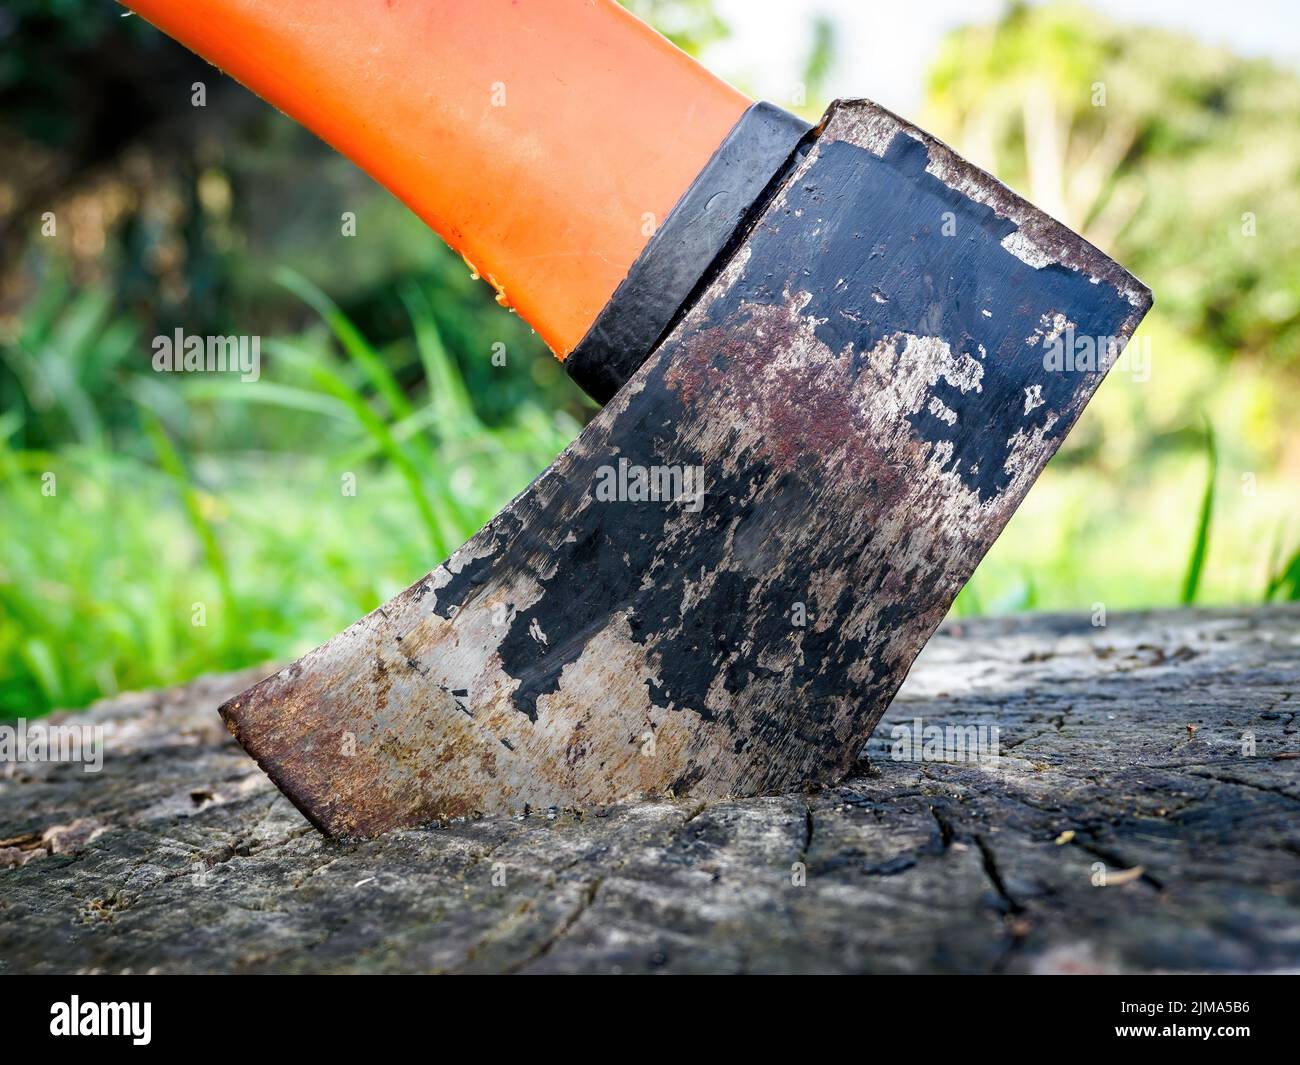 Splitting maul axe in stump. Small, used, with orange plastic handle. Stock photo. Stock Photo